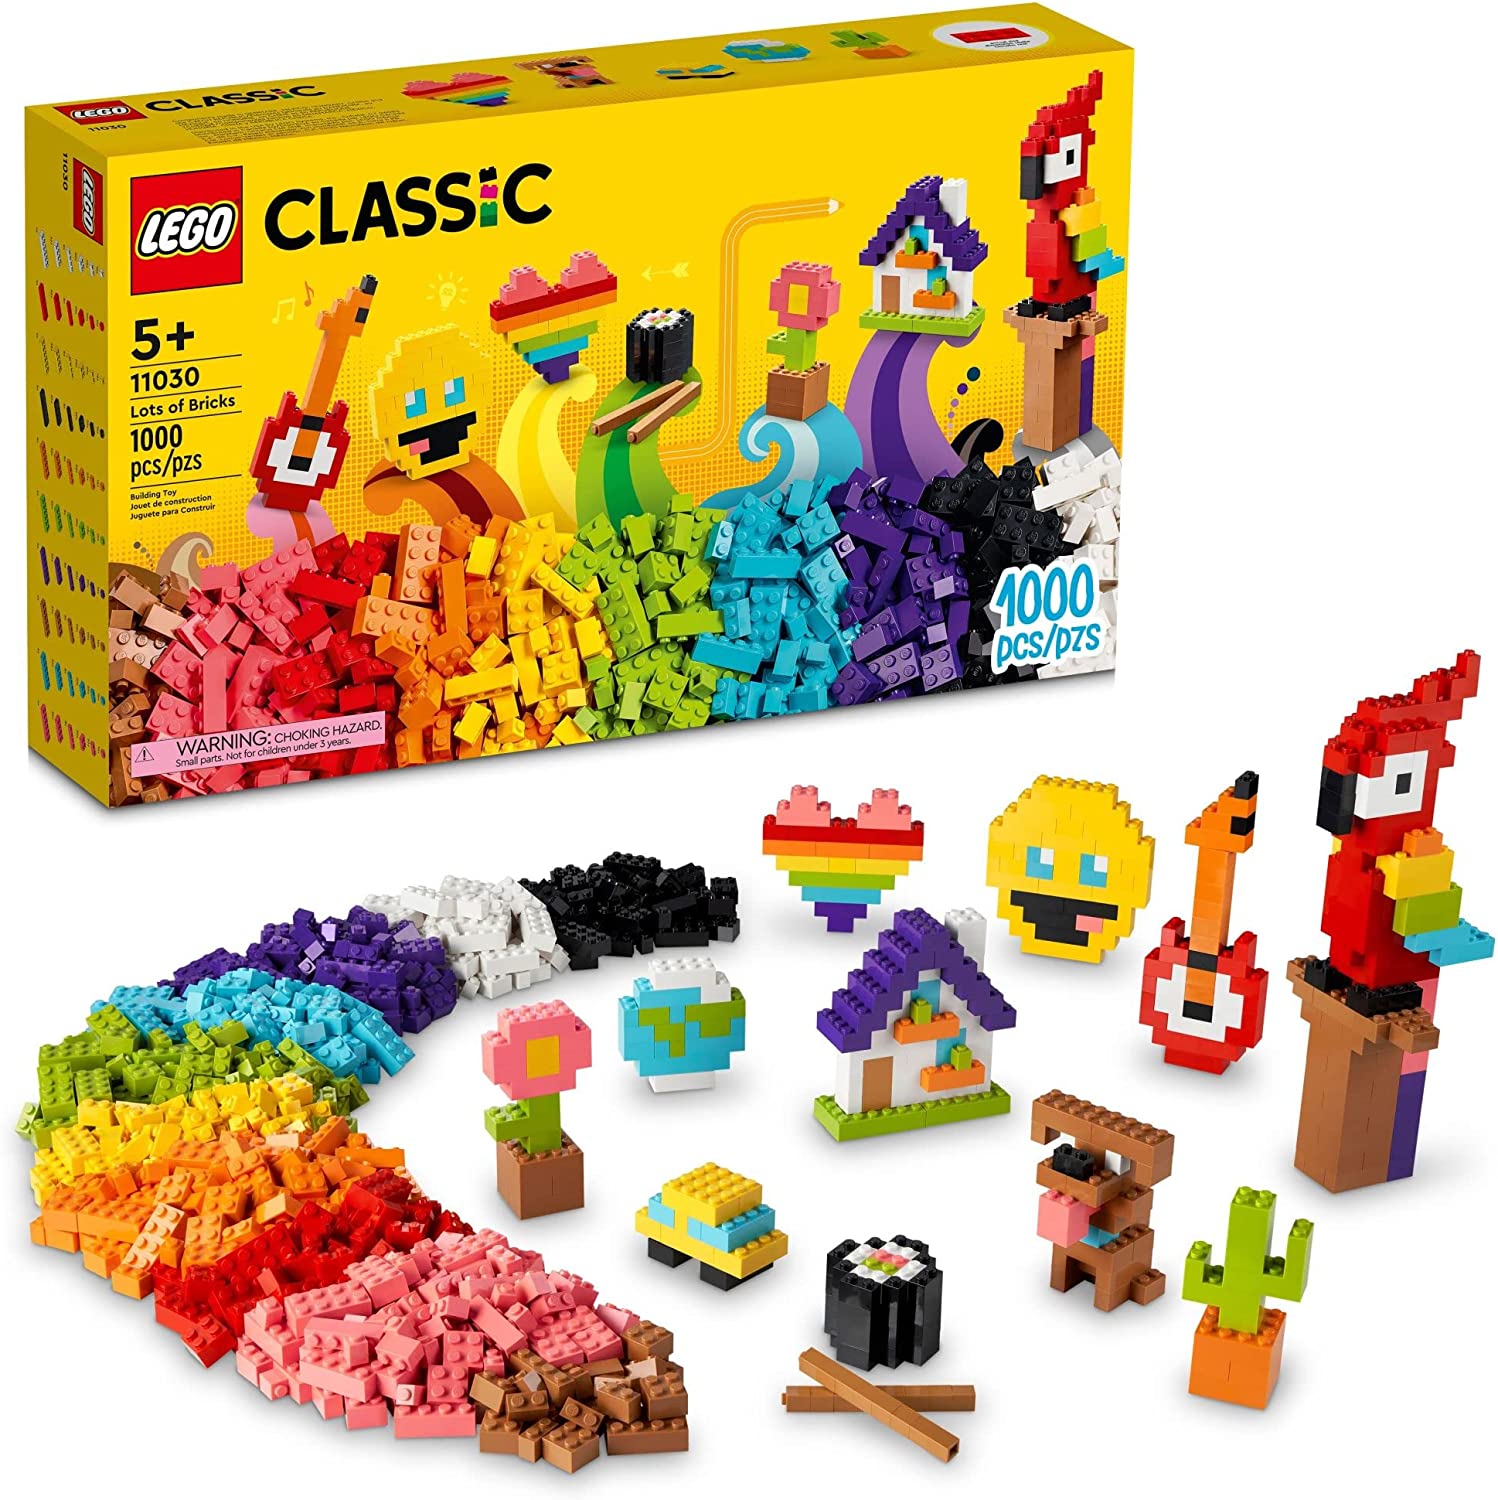 Lego Classic 11030 Lots of Bricks Building Toy (1000 pcs)